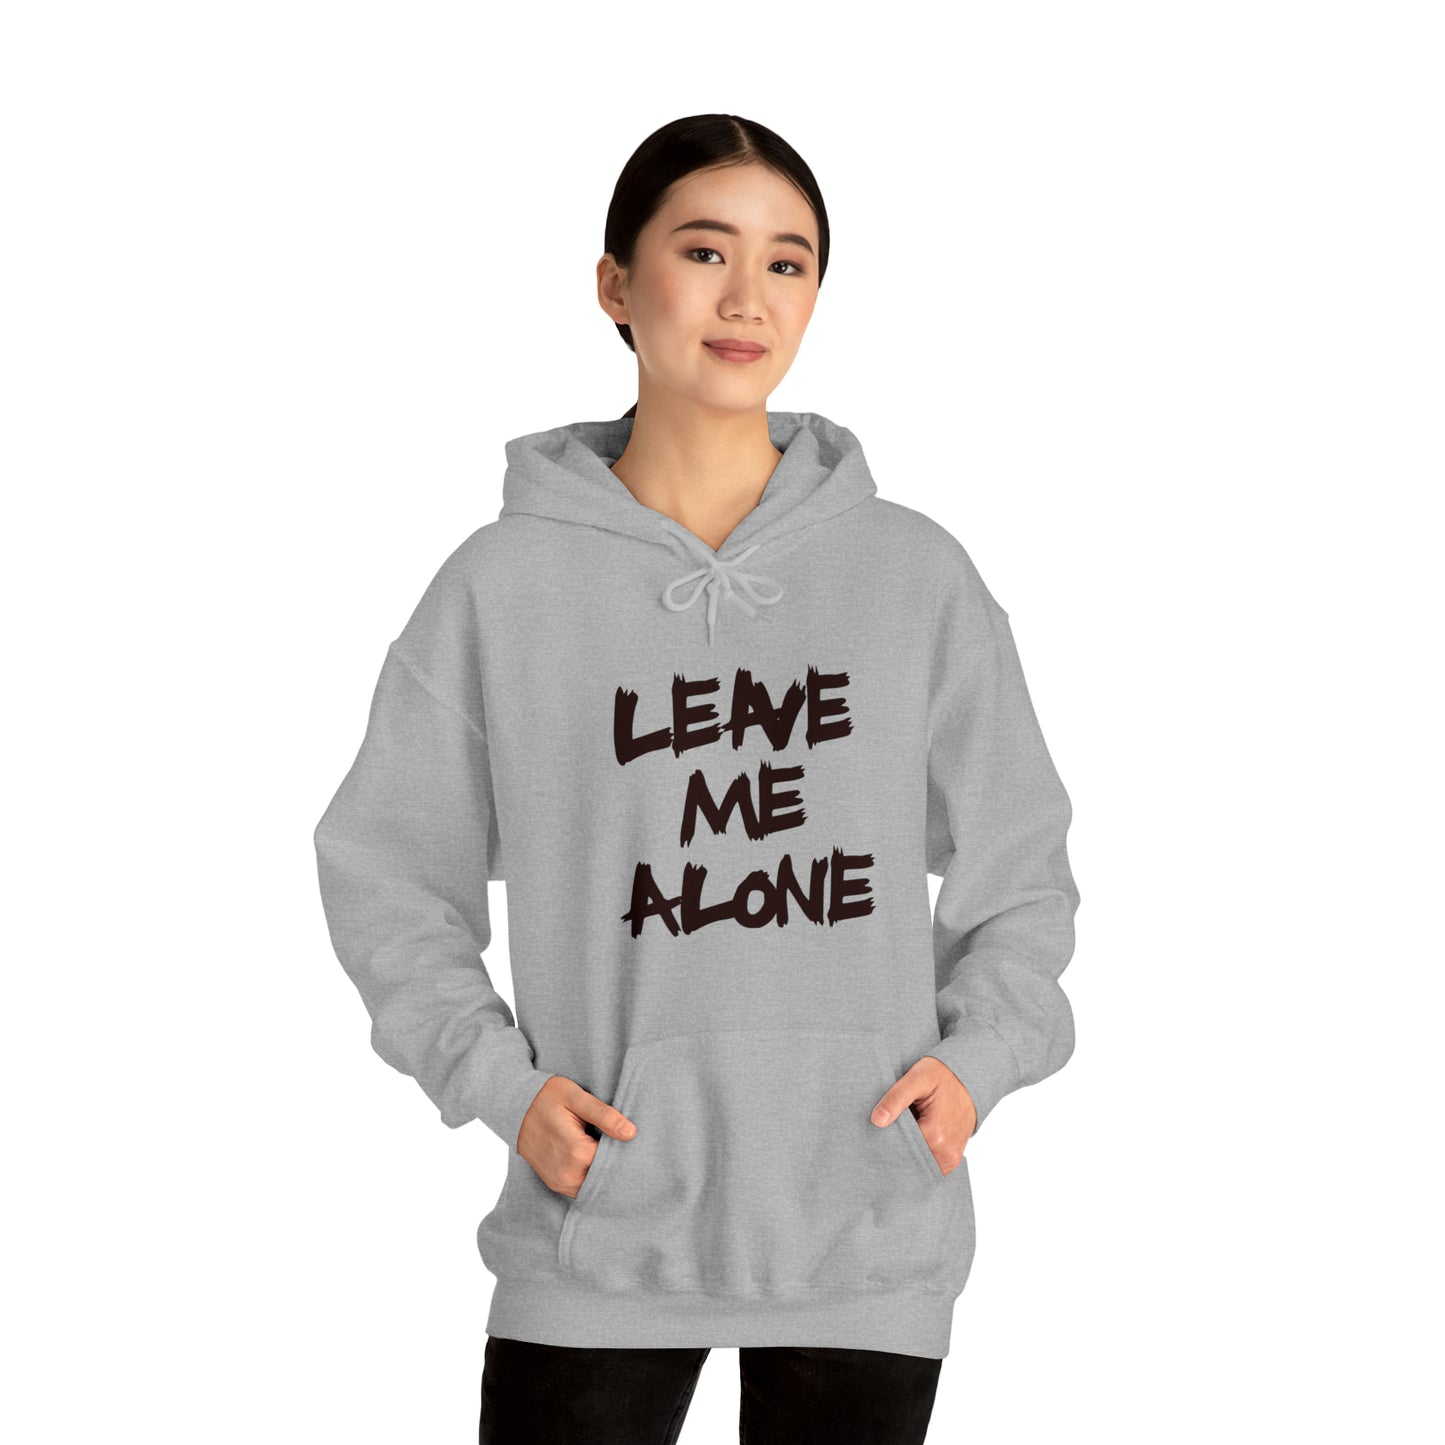 Leave Me Alone - Hooded Sweatshirt